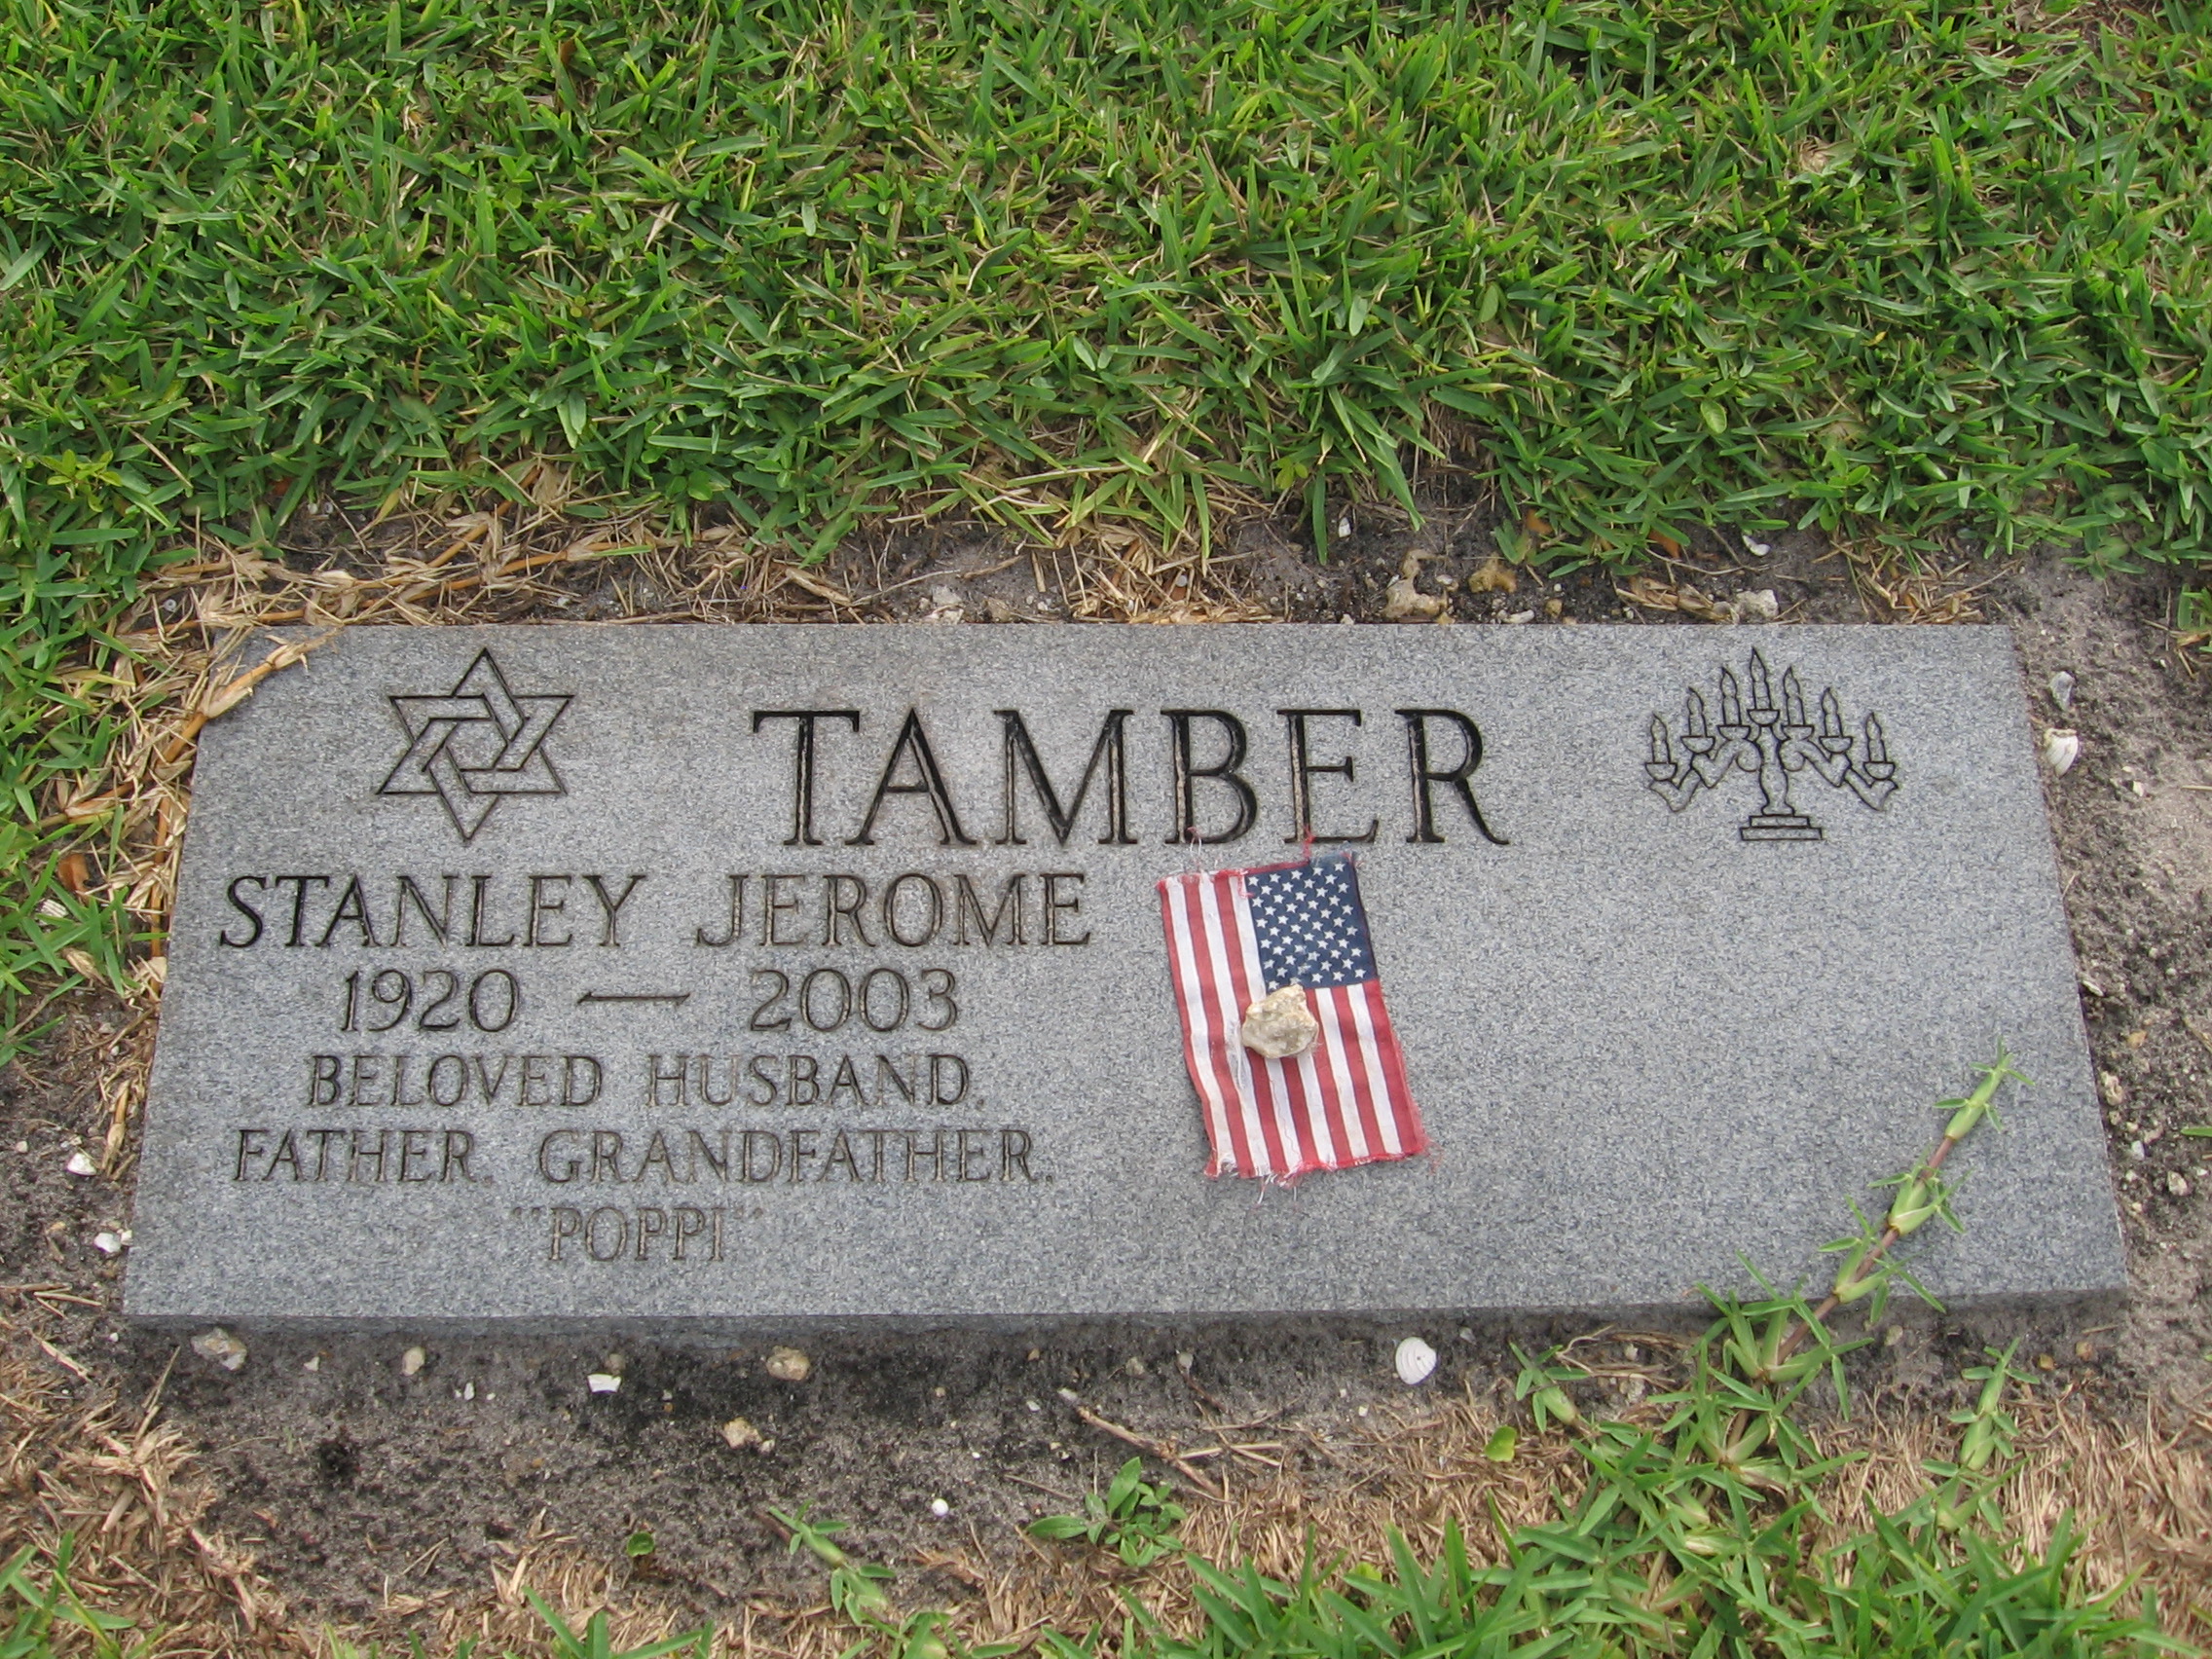 Stanley Jerome Tamber